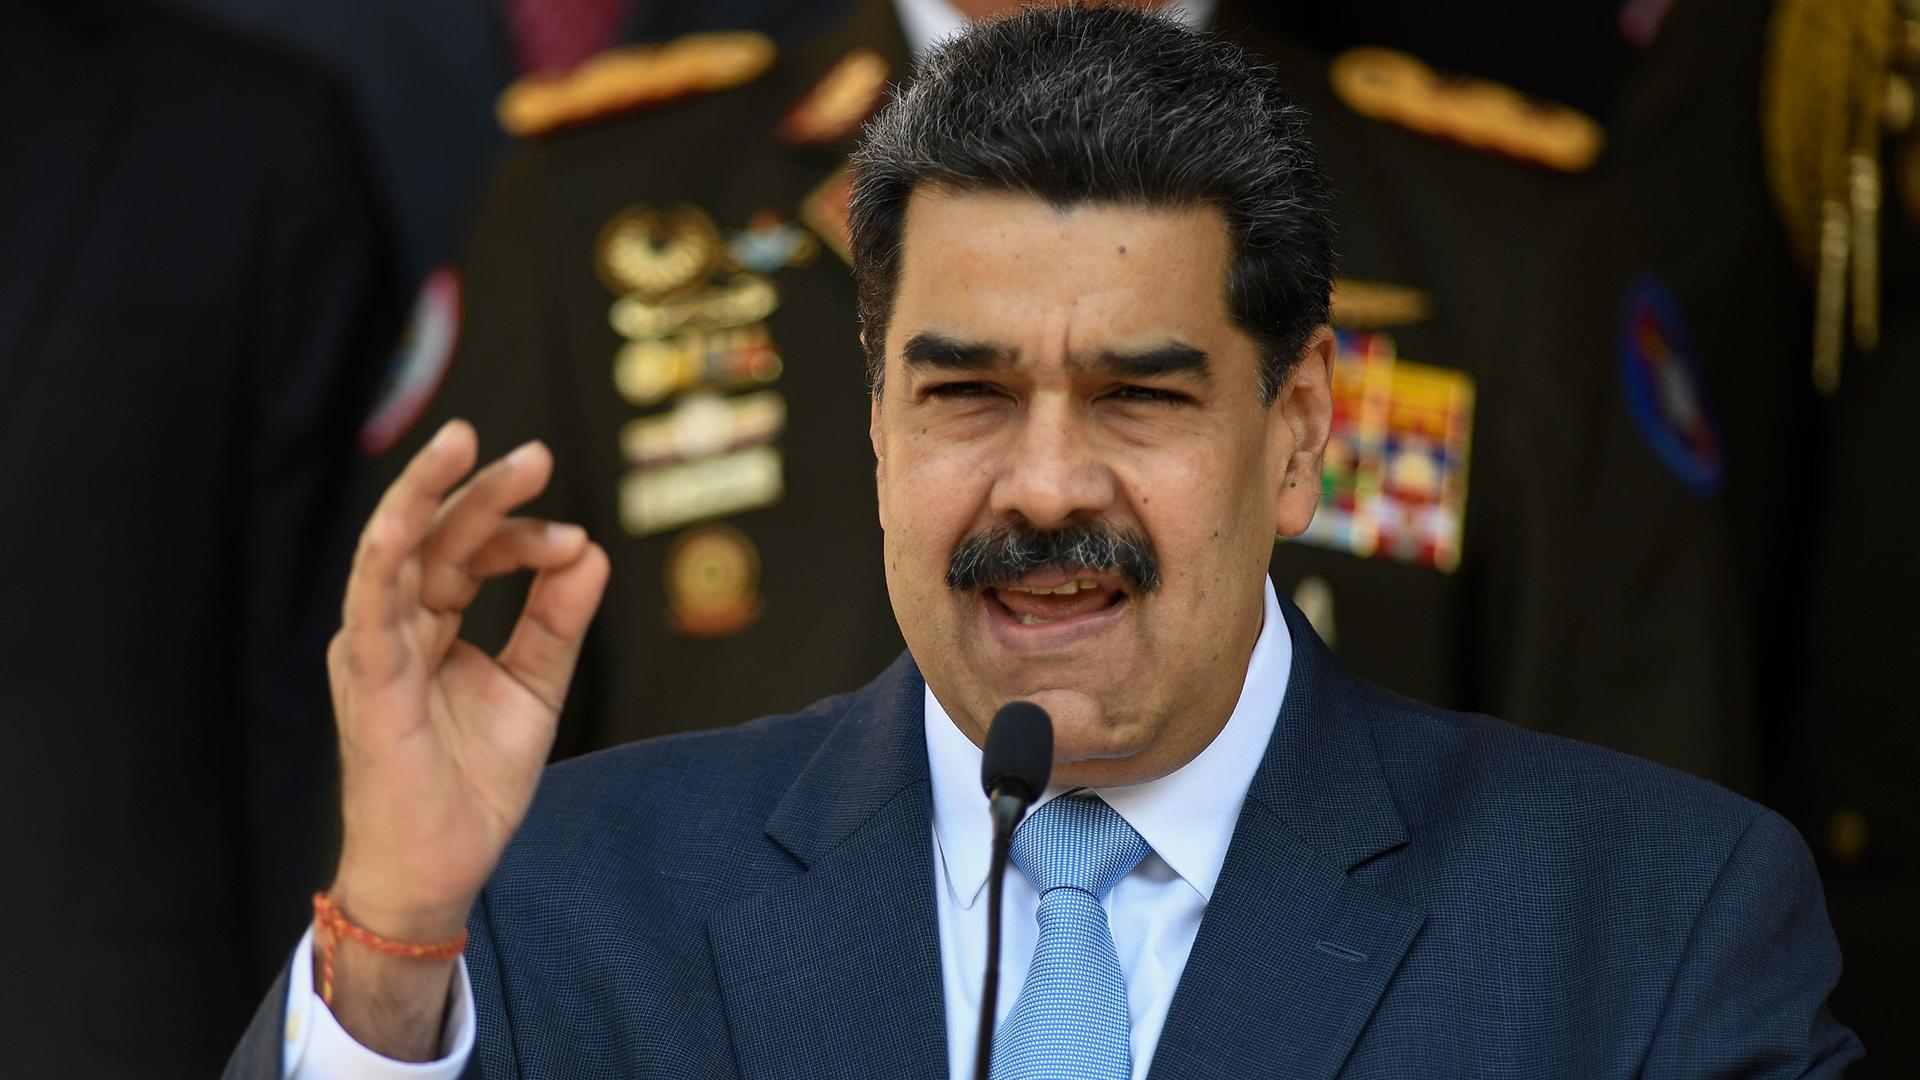 Venezuelan President Nicolás Maduro is shown speaking with his right hand rised.